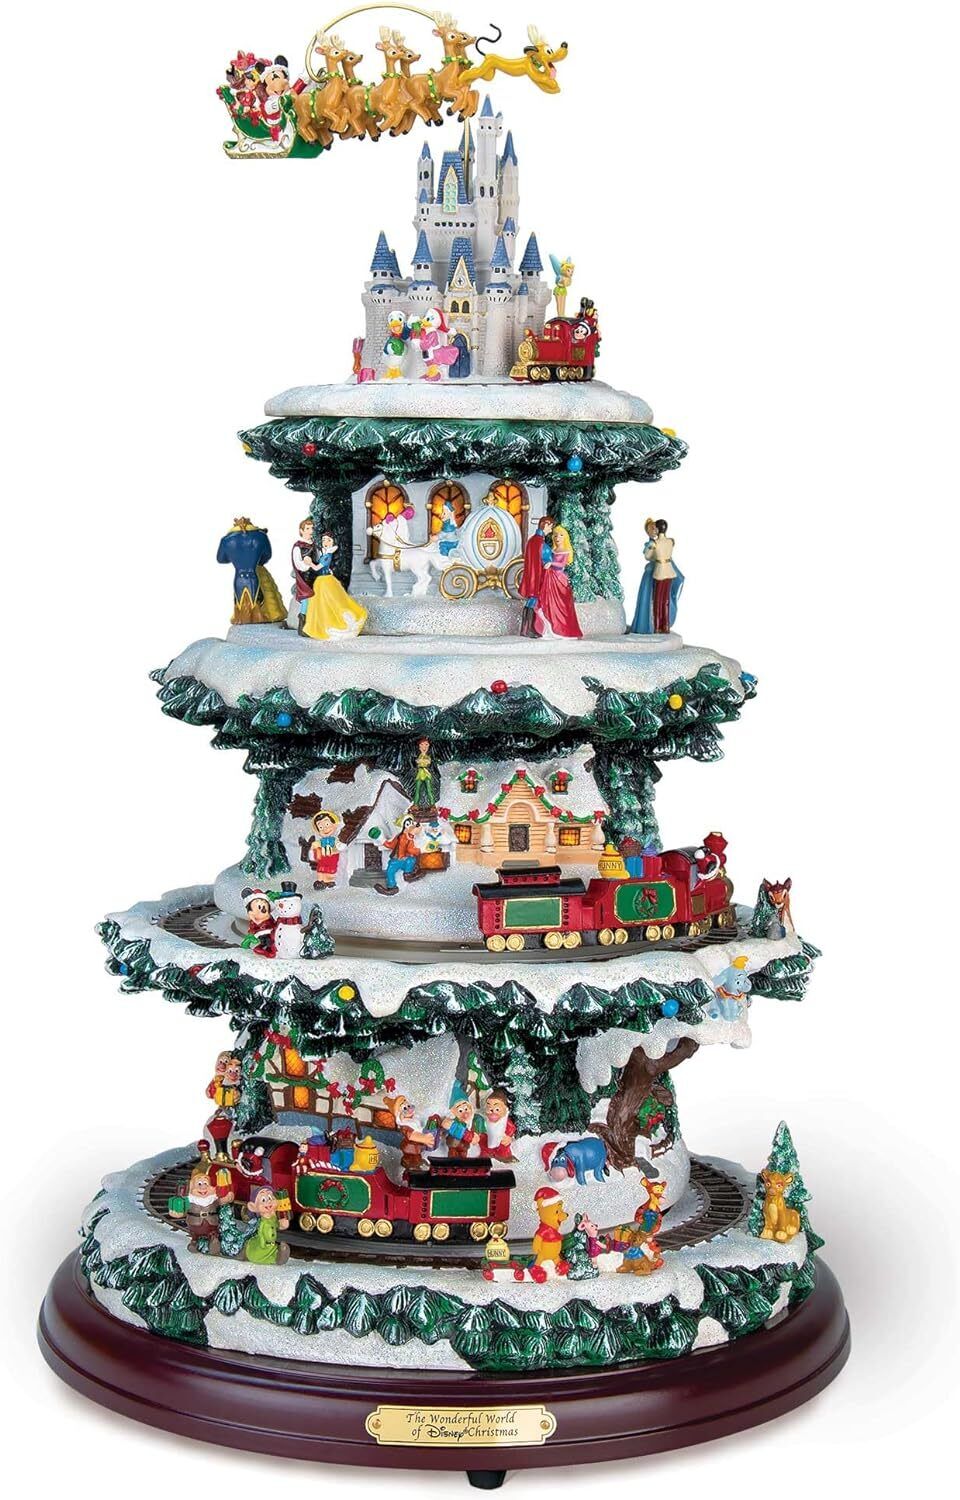 Bradford Exchange Disney Tabletop Christmas Tree: The Wonderful World of Disney